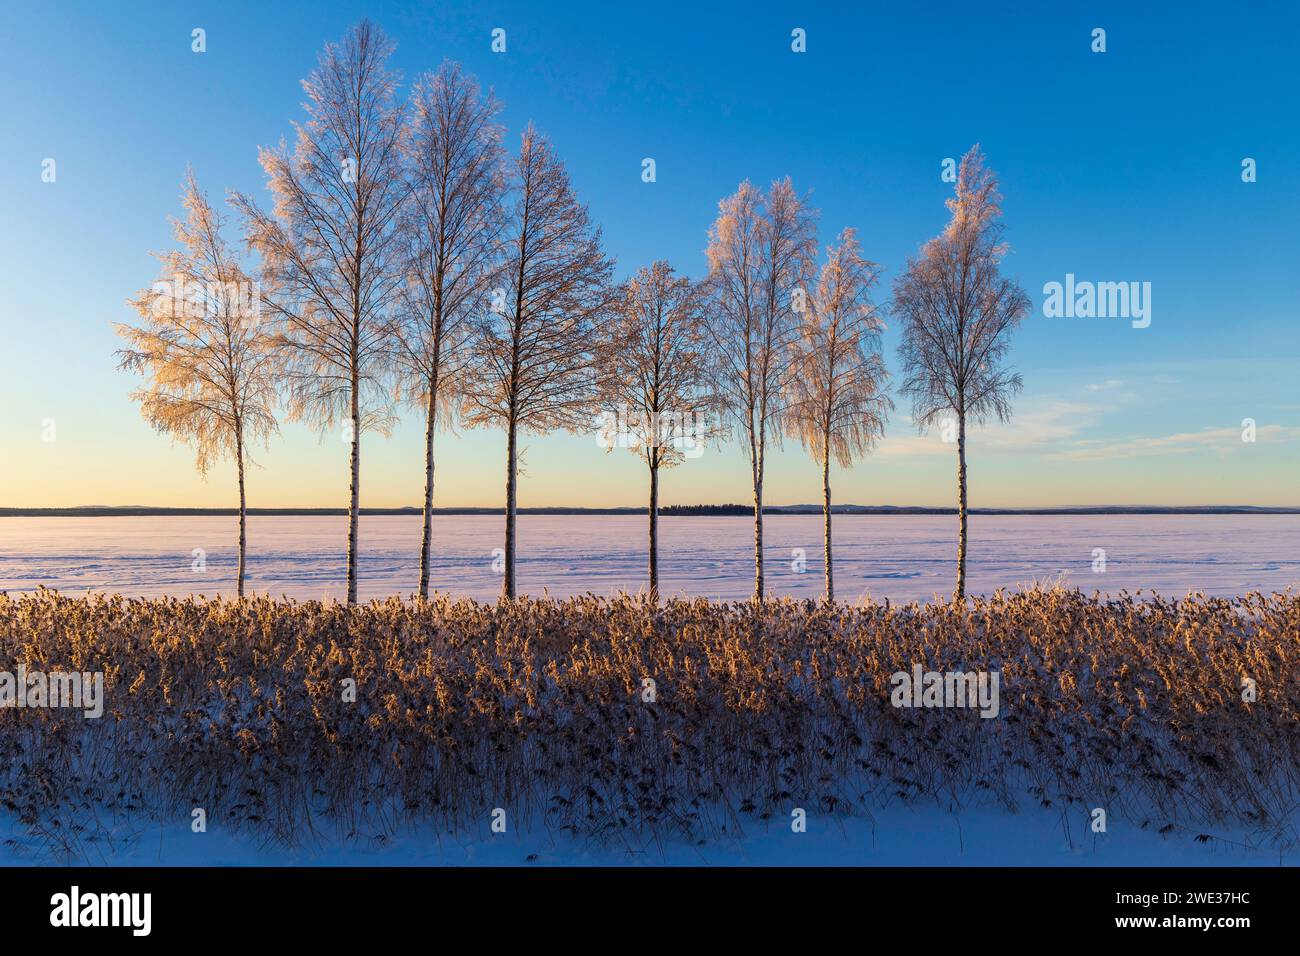 A row of trees against a snowy backdrop under a blue sky. Sandviken, Sweden Stock Photo